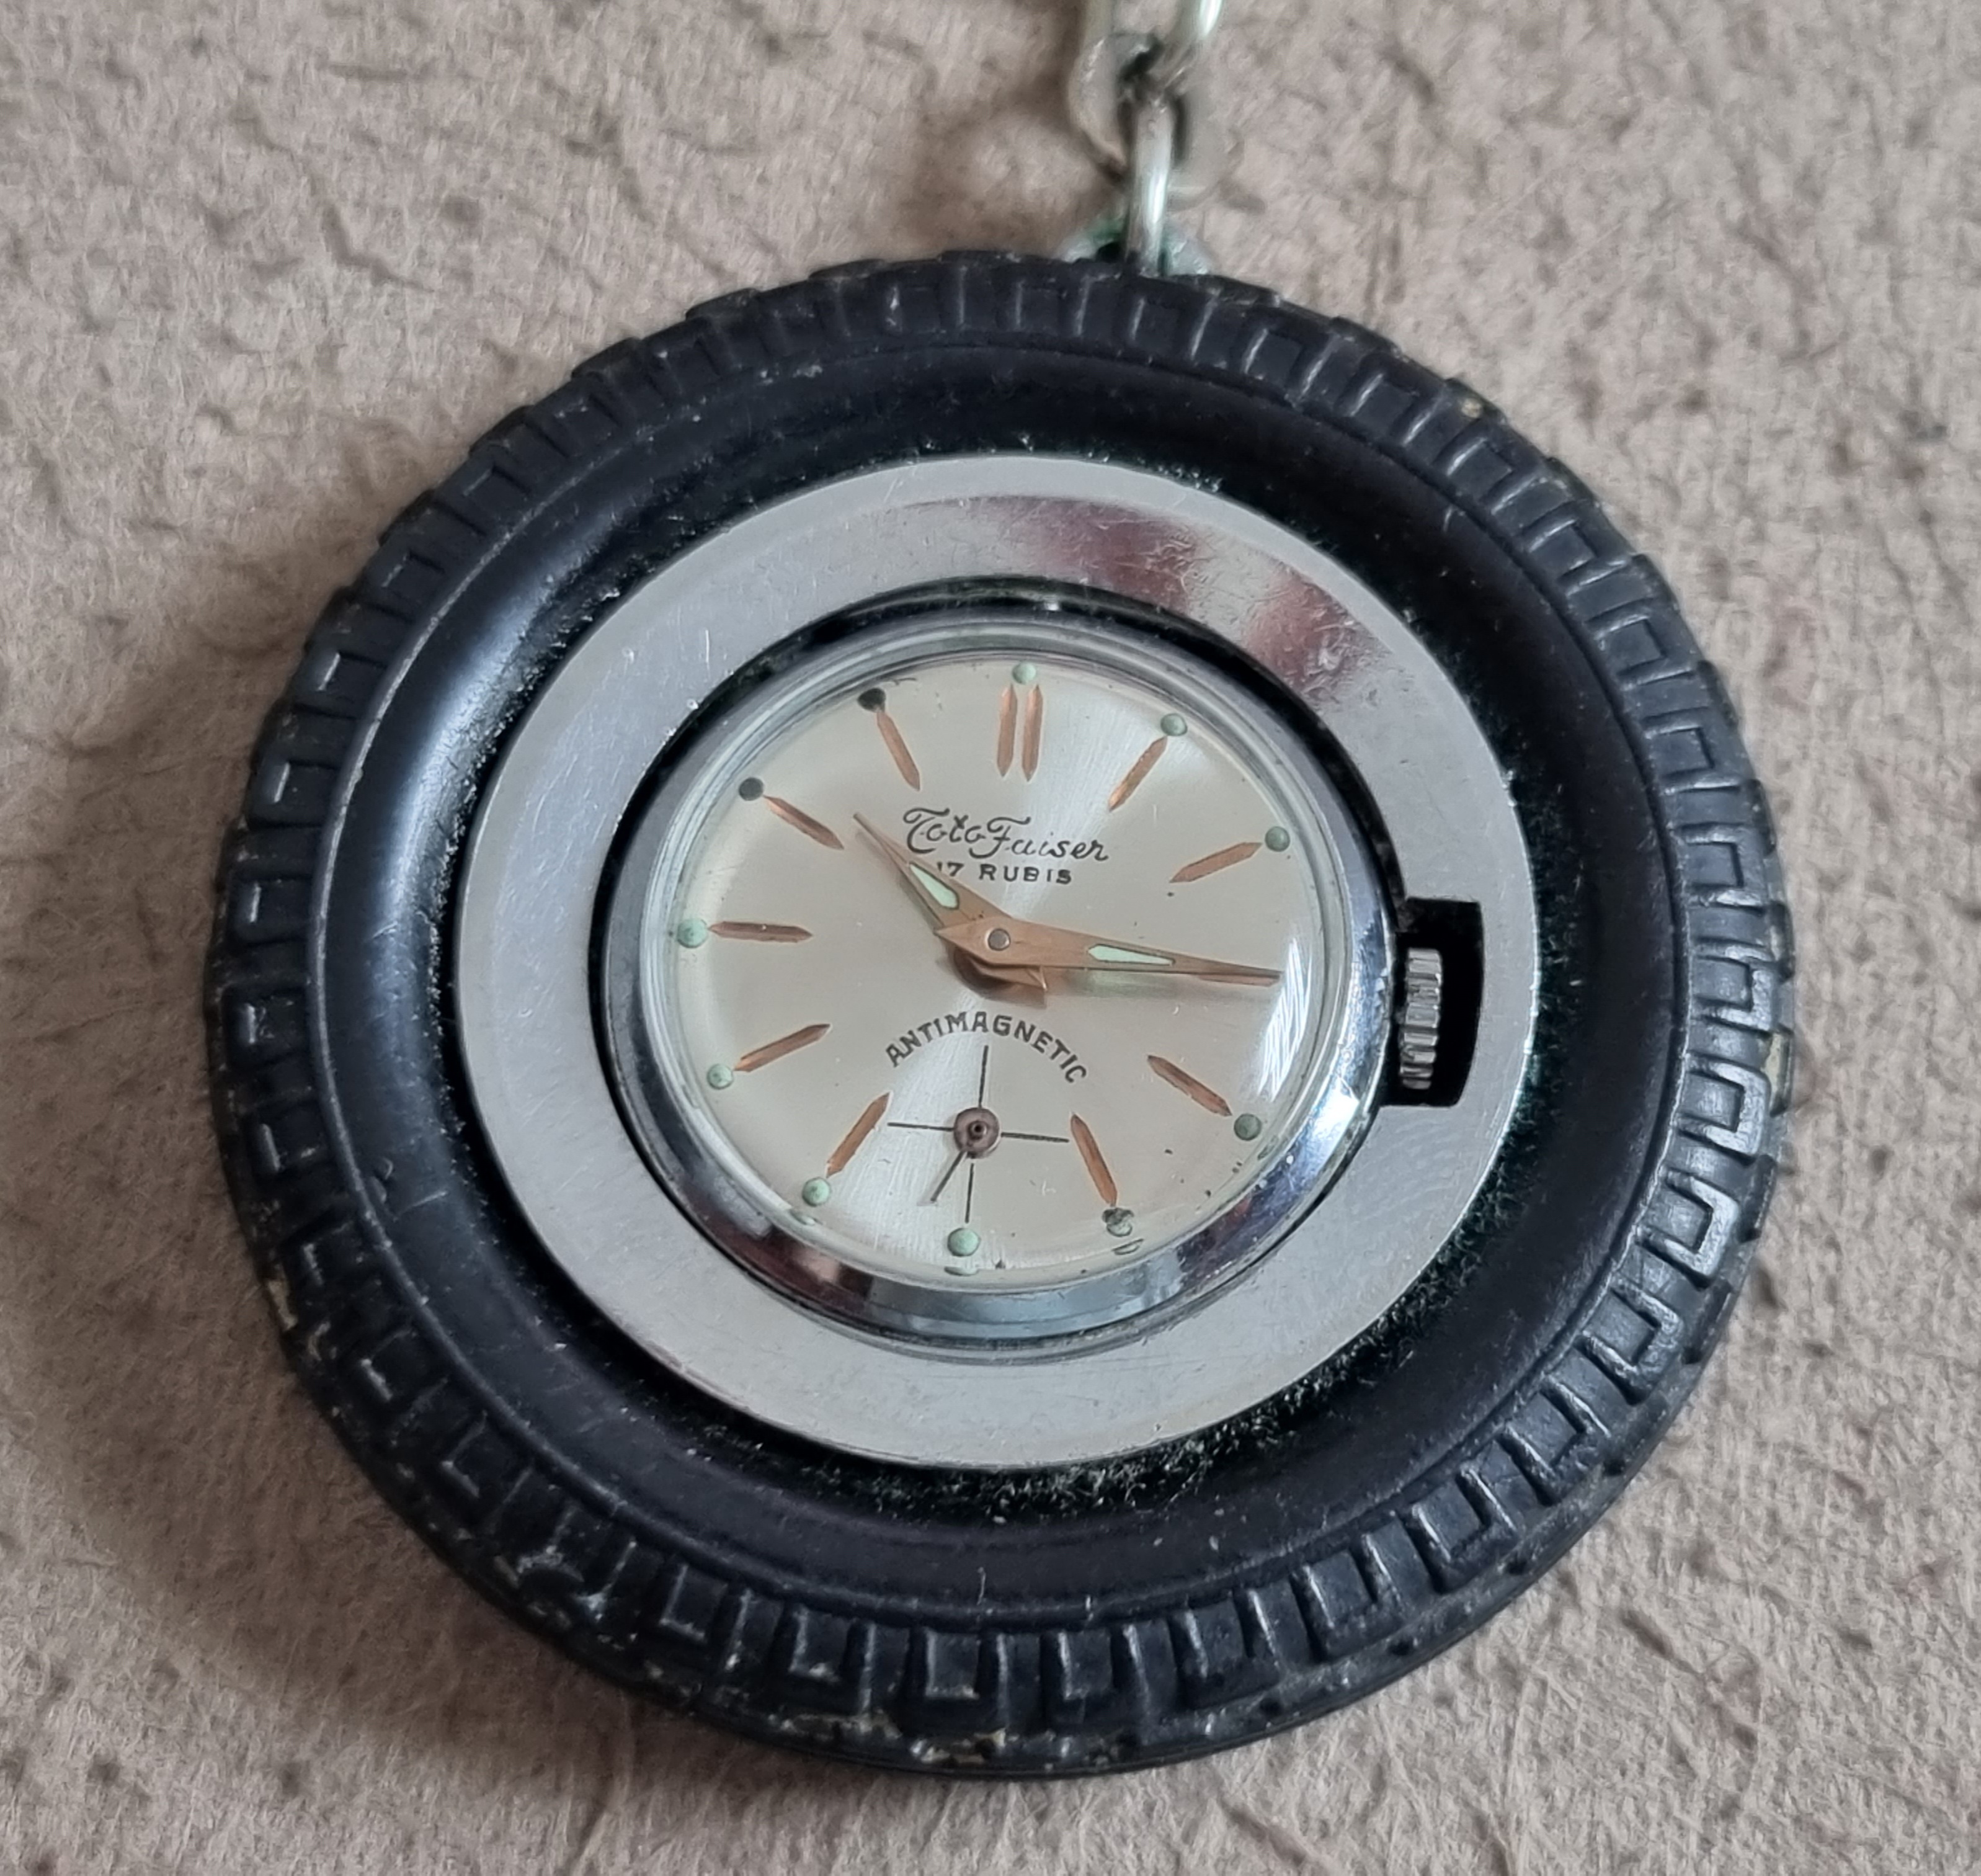 Anonimo Toto Faiser pocket watch keychain wheel watch steel mm 45.5 manual winding good condition | San Giorgio a Cremano